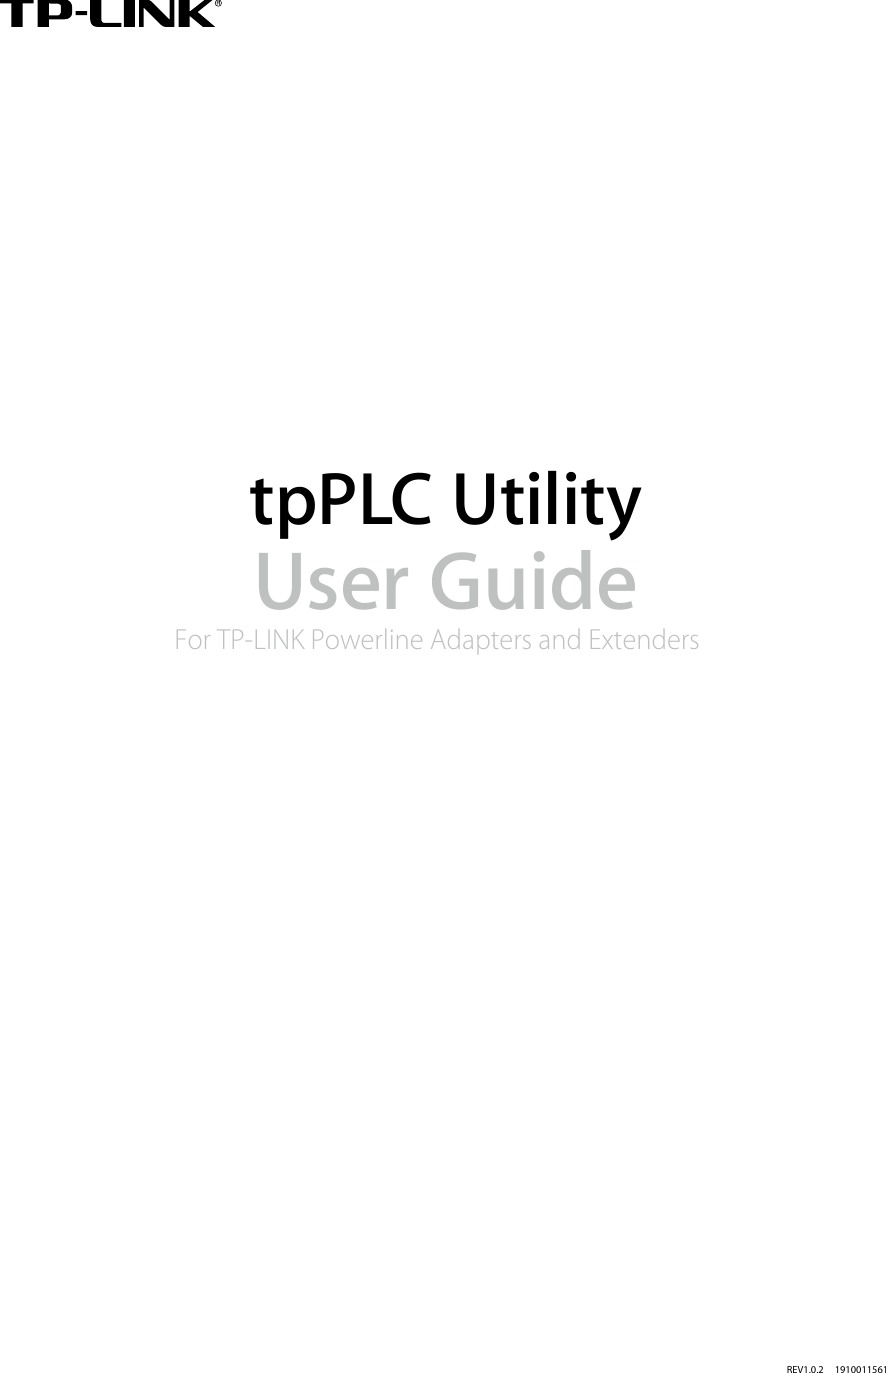 tpplc utility on windows